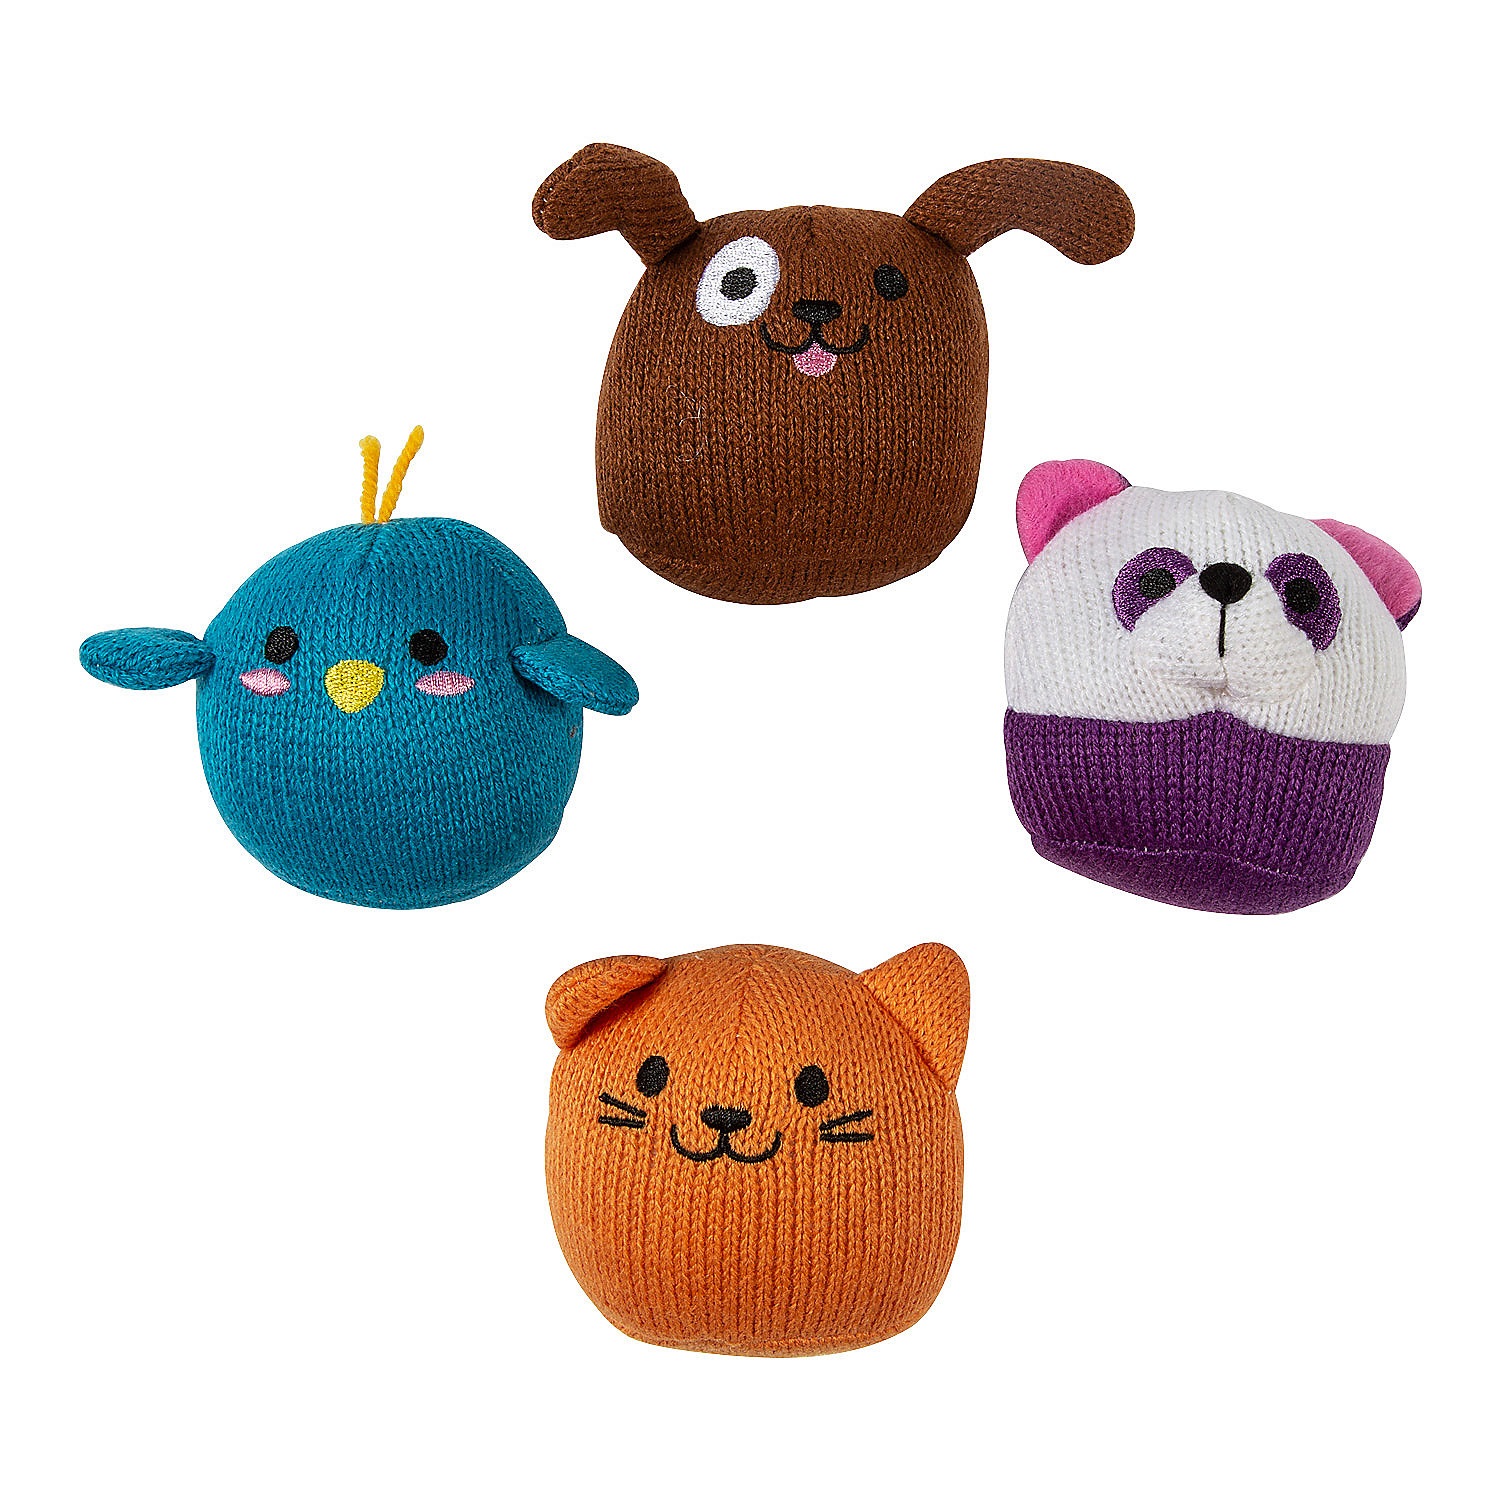 crochet-stuffed-animals-12-pc-_14095937